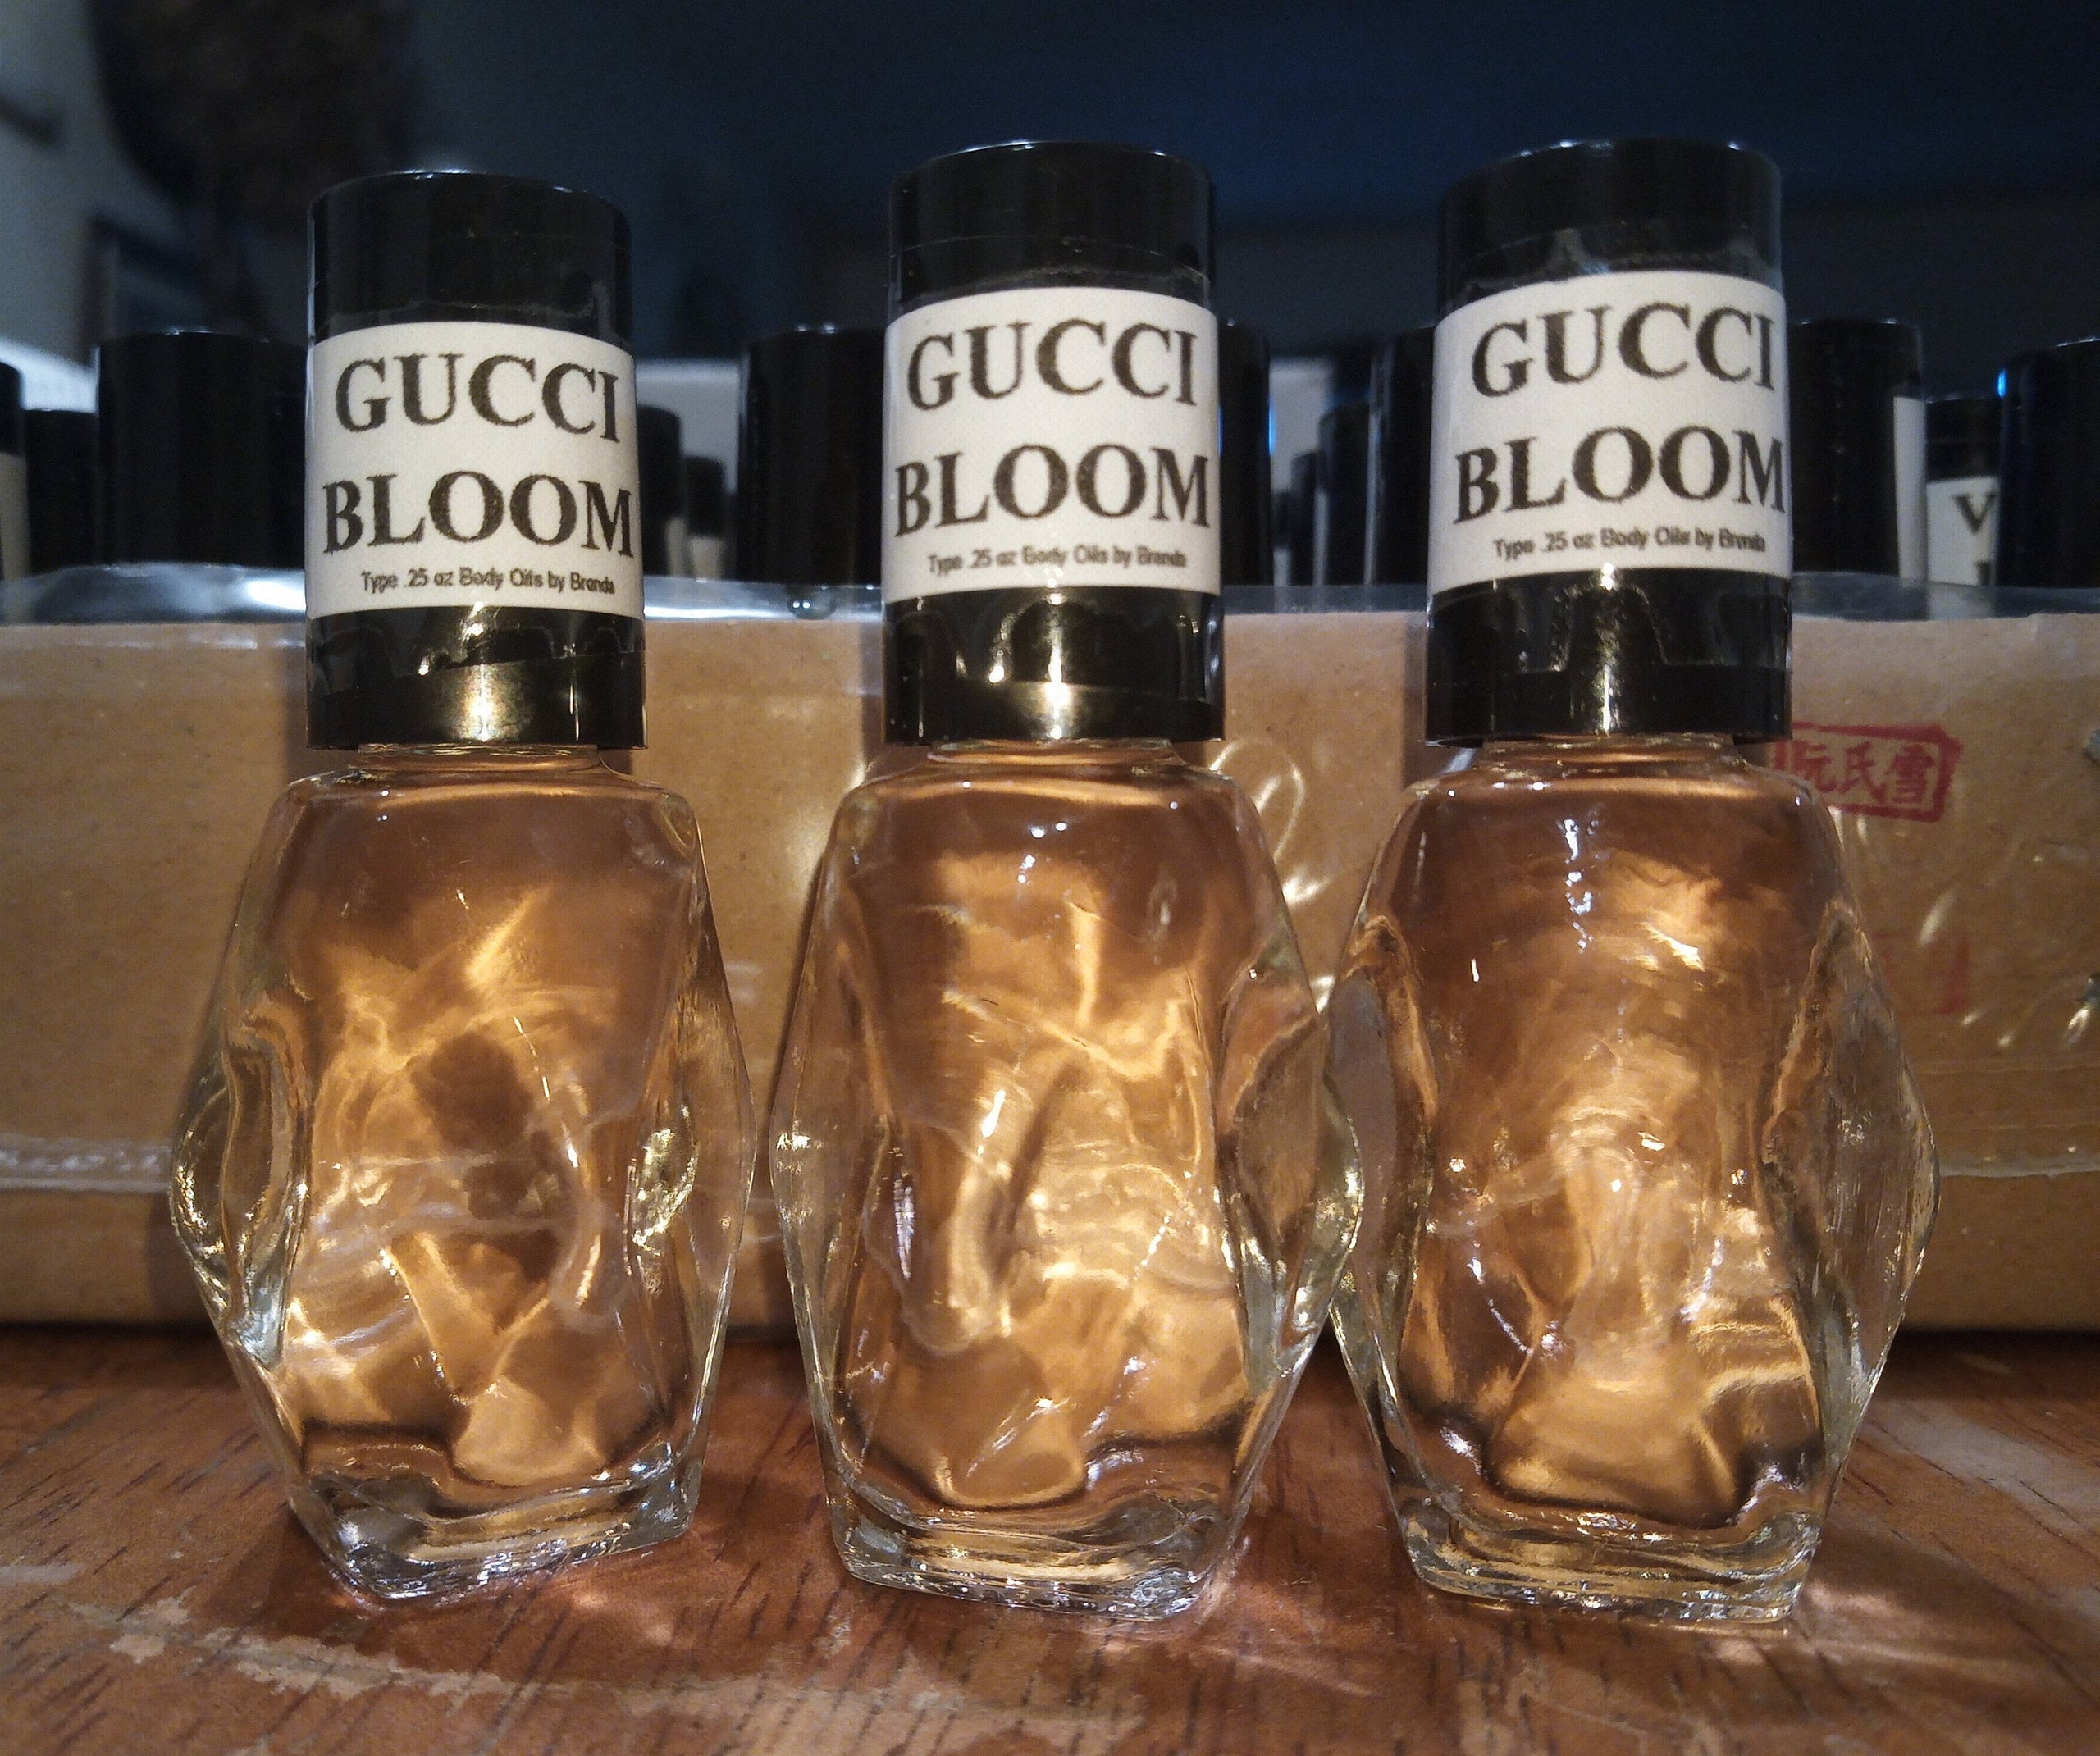 Gucci - Gucci Bloom - Oil Perfumery